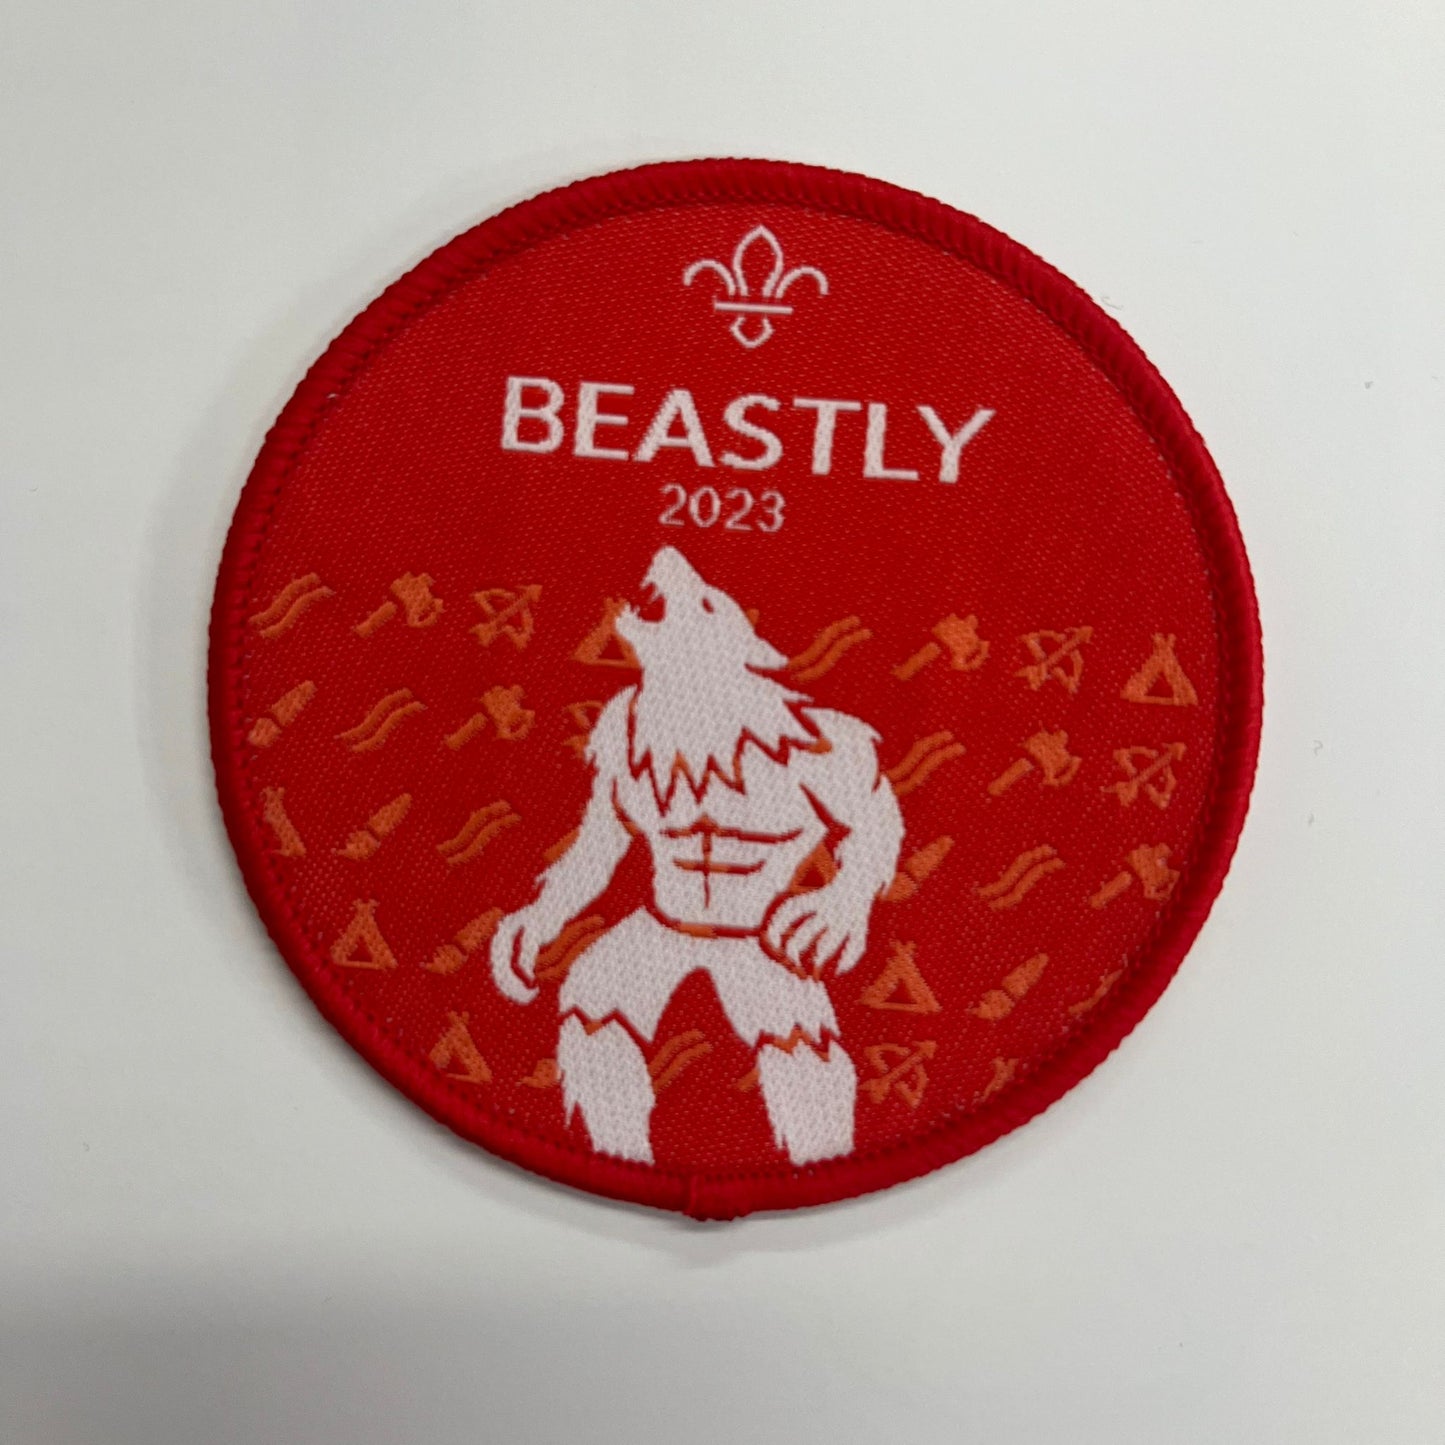 BEASTLY 2023 Badge